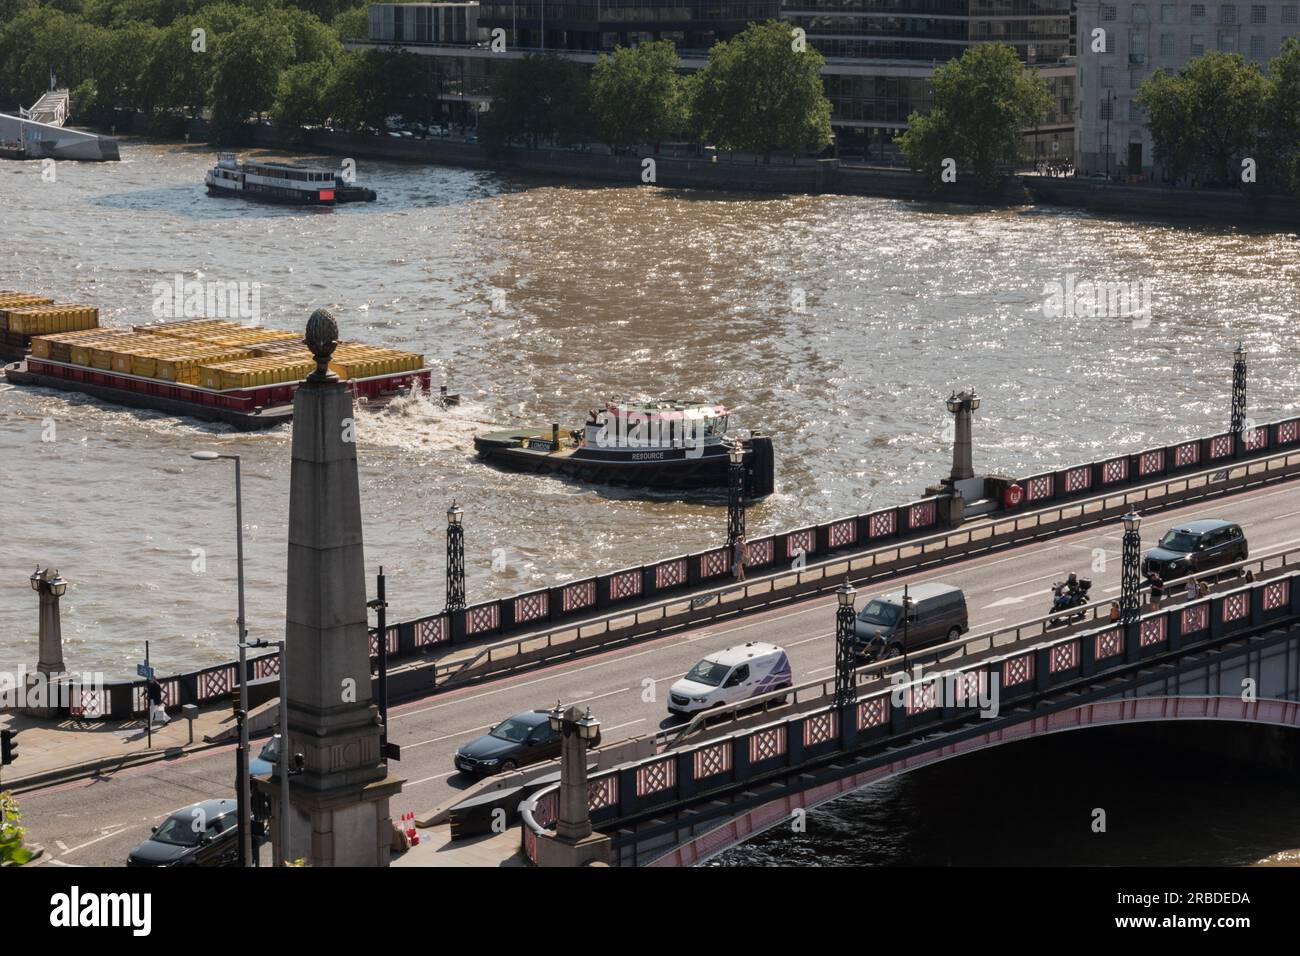 Resource, a Cory tug boat transporting industrial waste downstream under Lambeth Bridge on the River Thames, London, England, U.K. Stock Photo